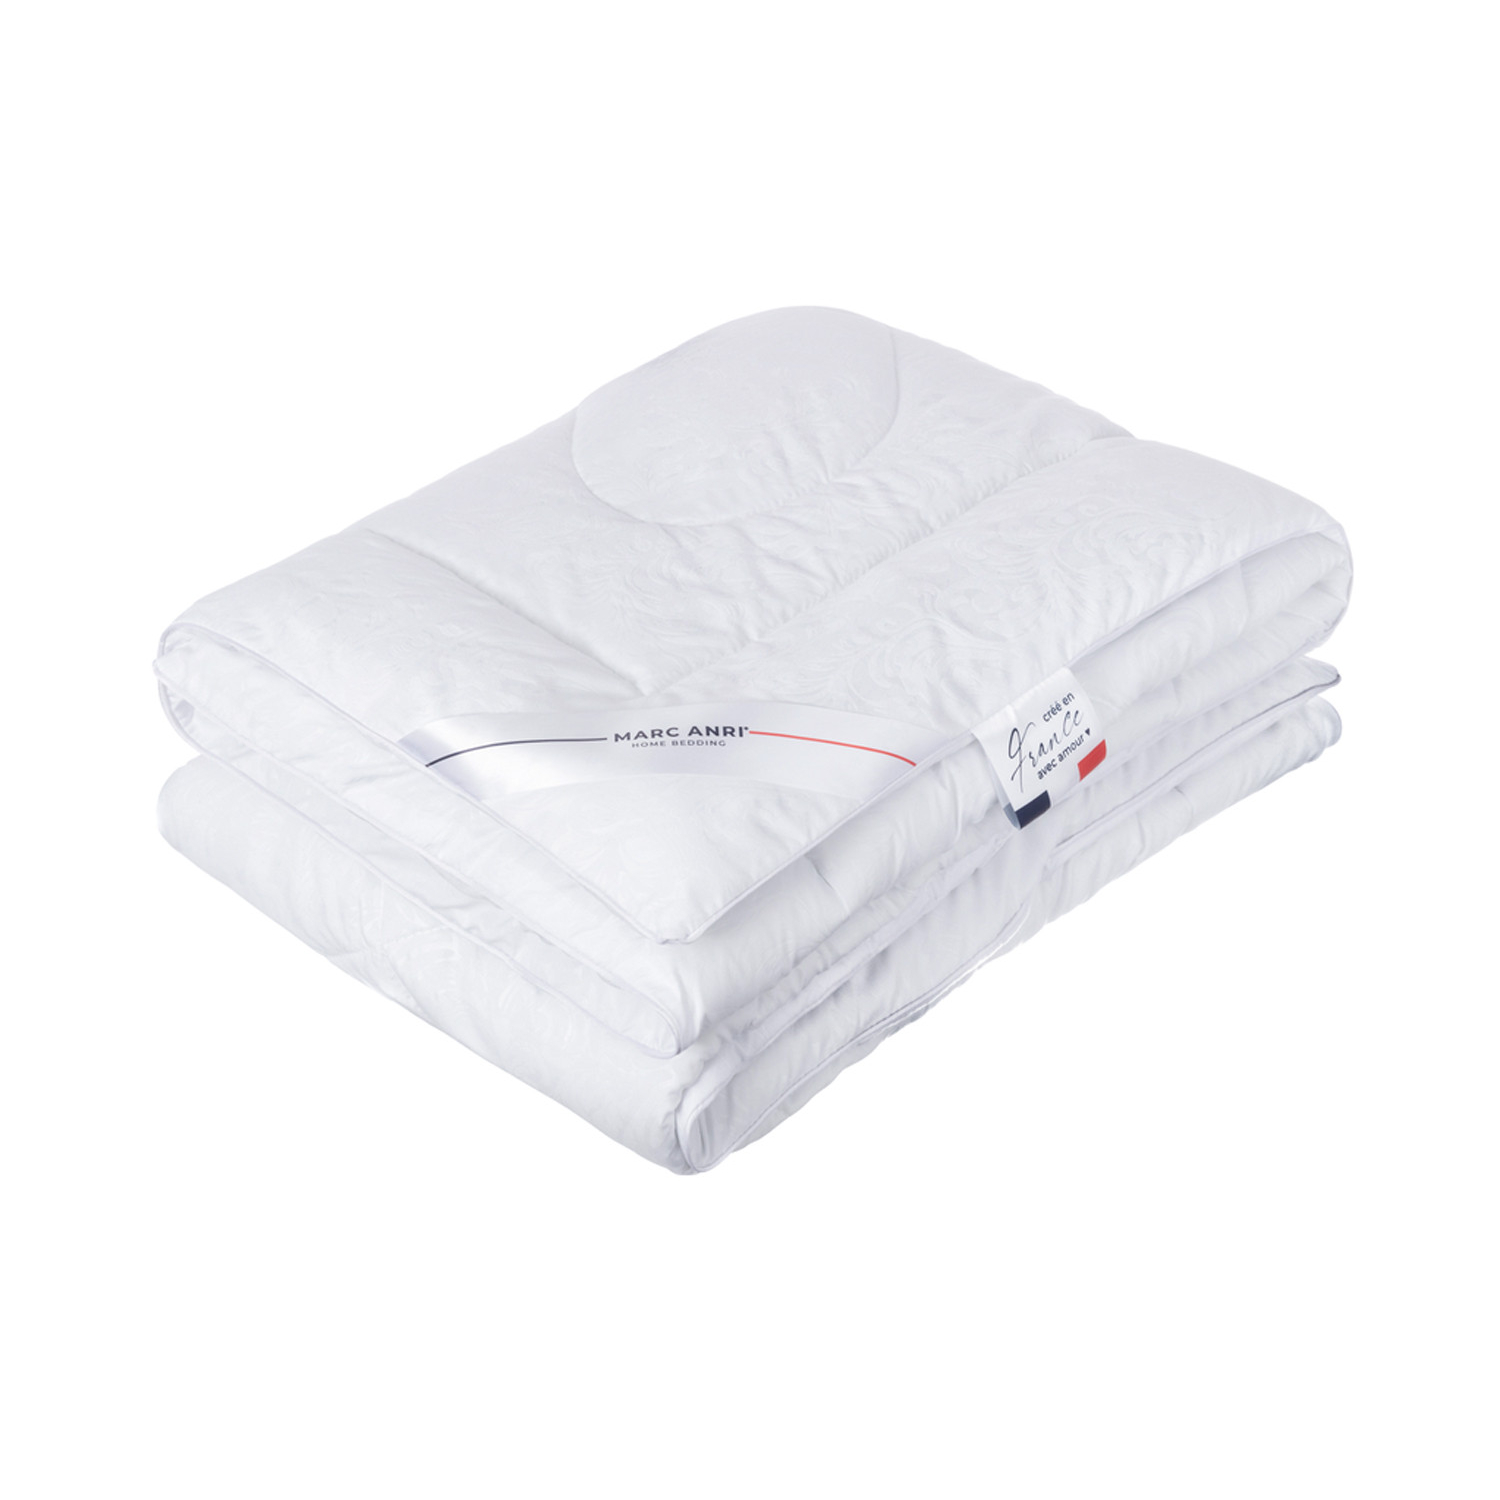 Одеяло Marc Anri Chinon белое 200х220 см (MA-MF) одеяло marc anri barr белое 200х220 см ma dc